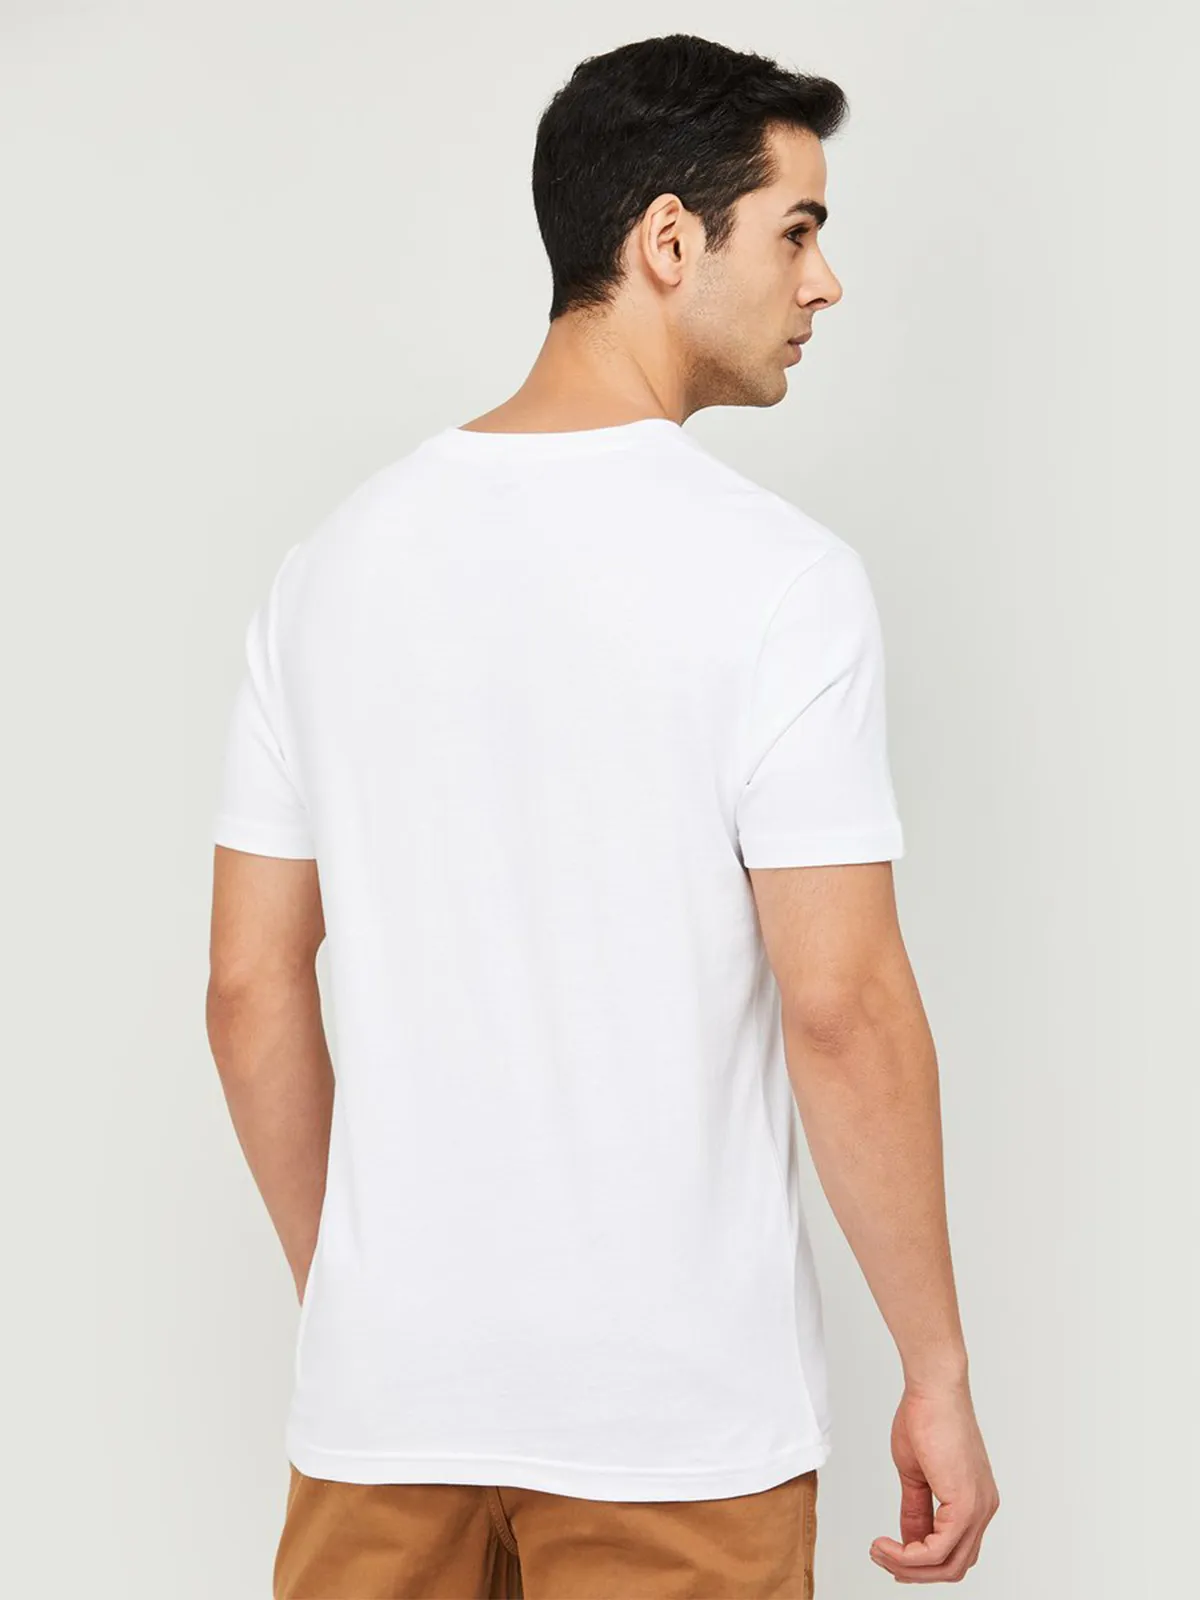 Levis printed white cotton t shirt